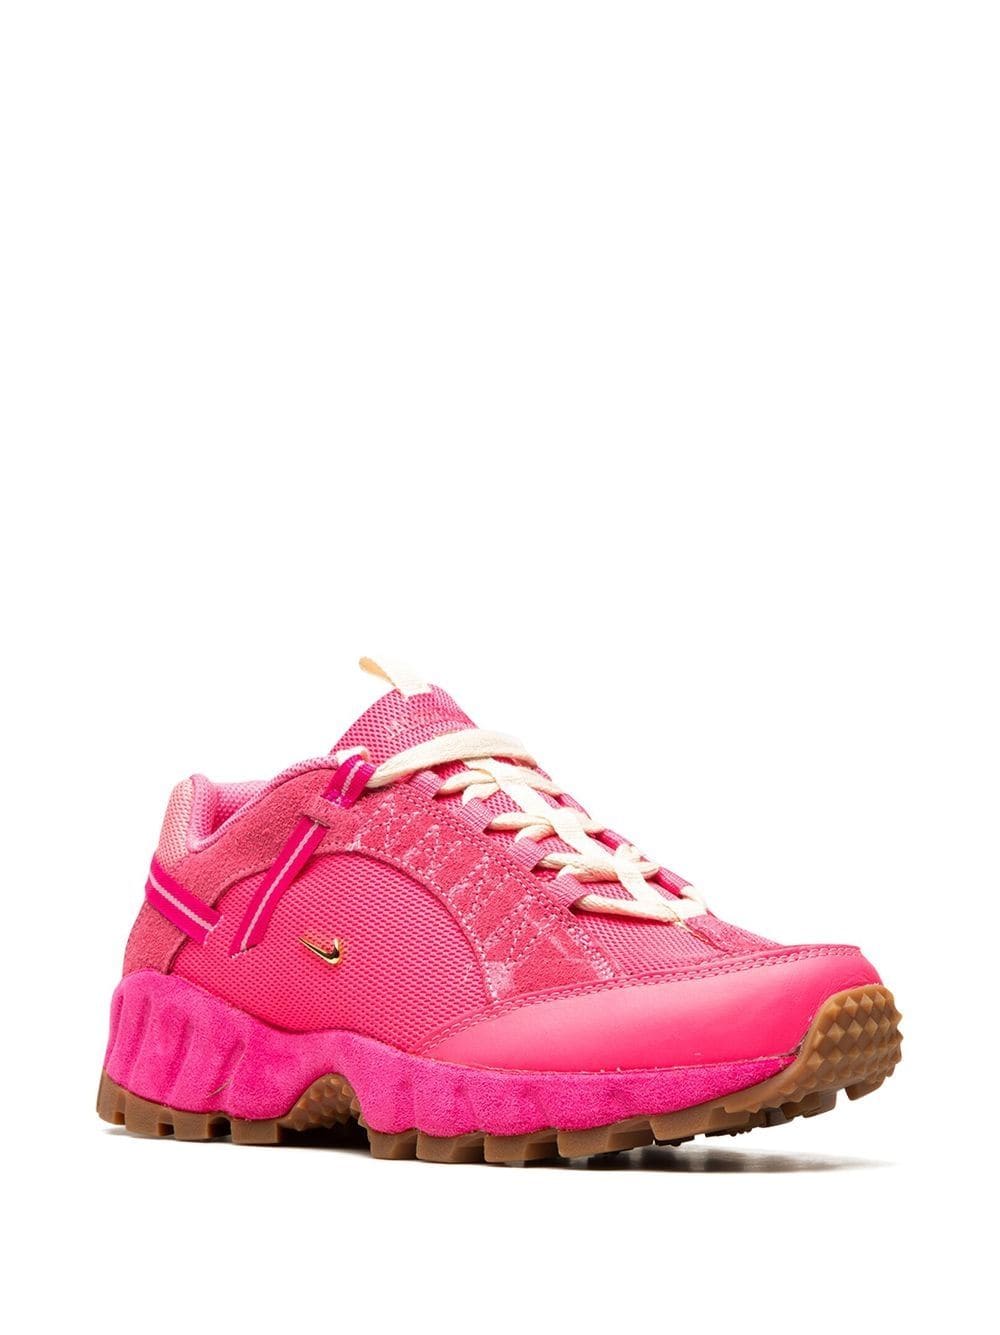 Nike Jacquemus x Air Humara LX Pink Flash